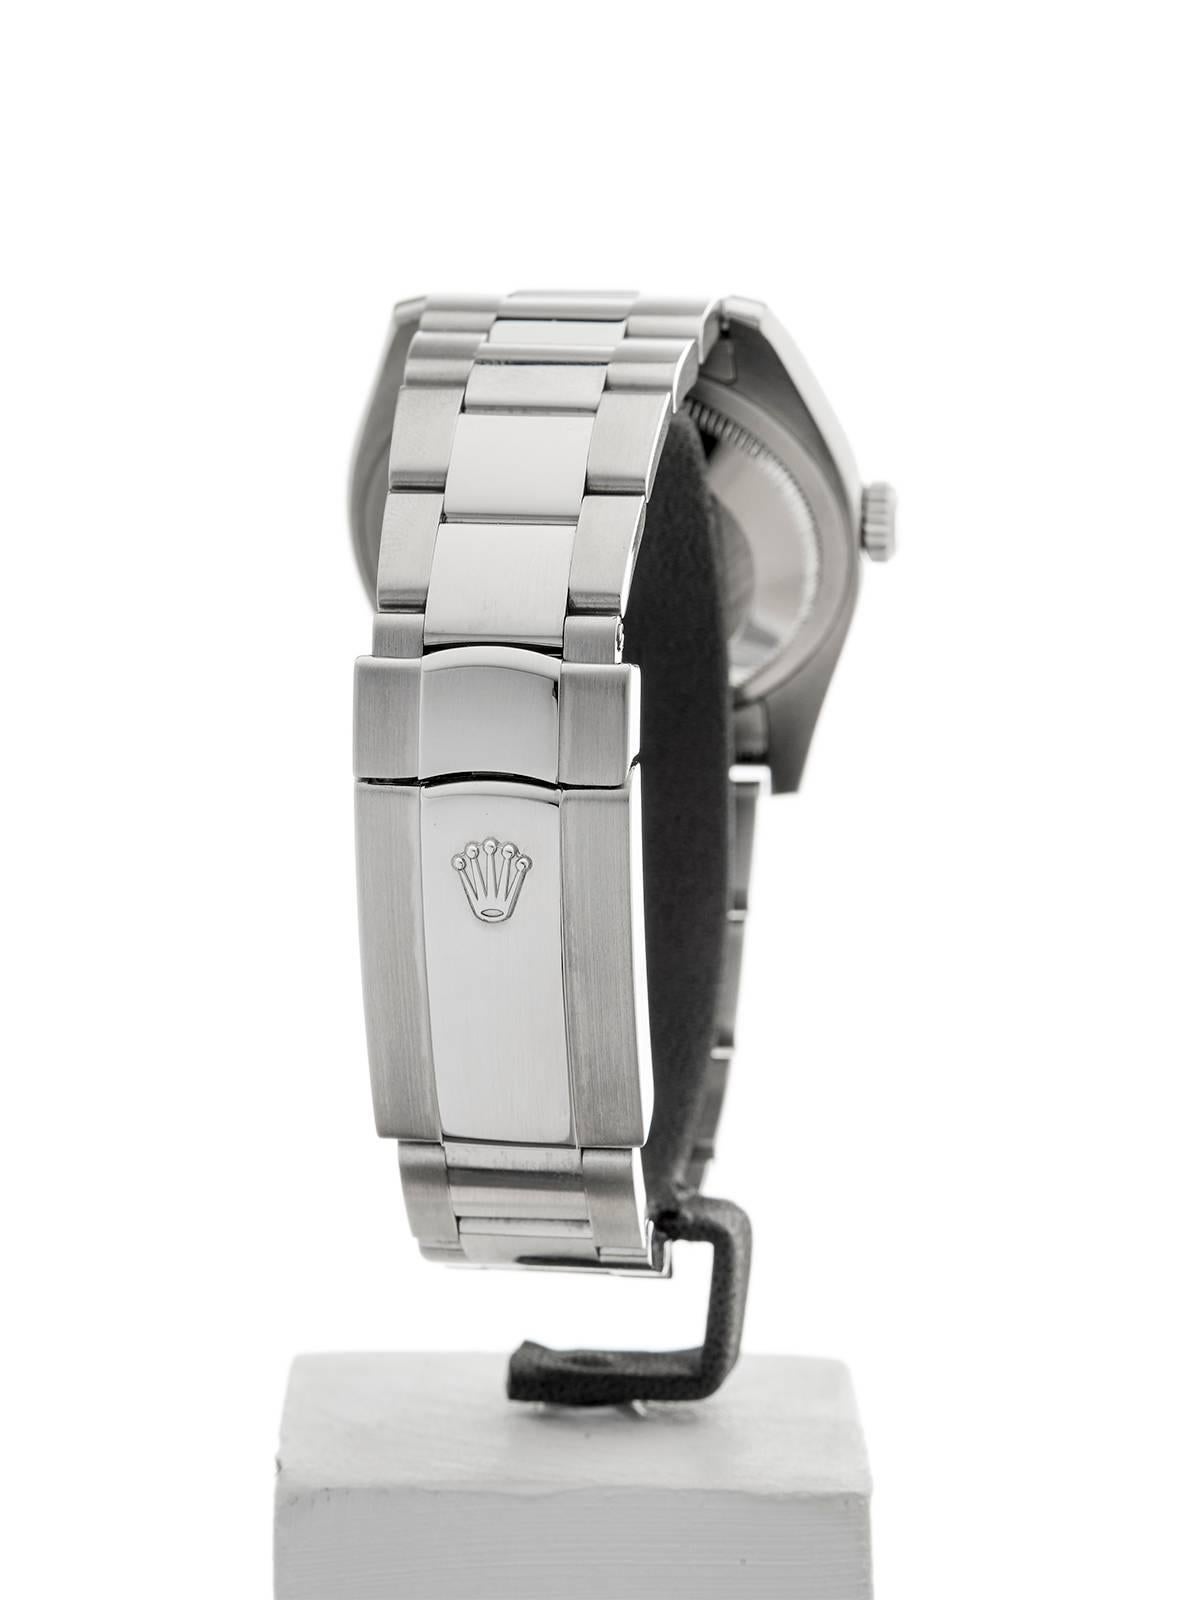 Rolex Stainless Steel Datejust Automatic Wristwatch Ref 116200, 2006 3